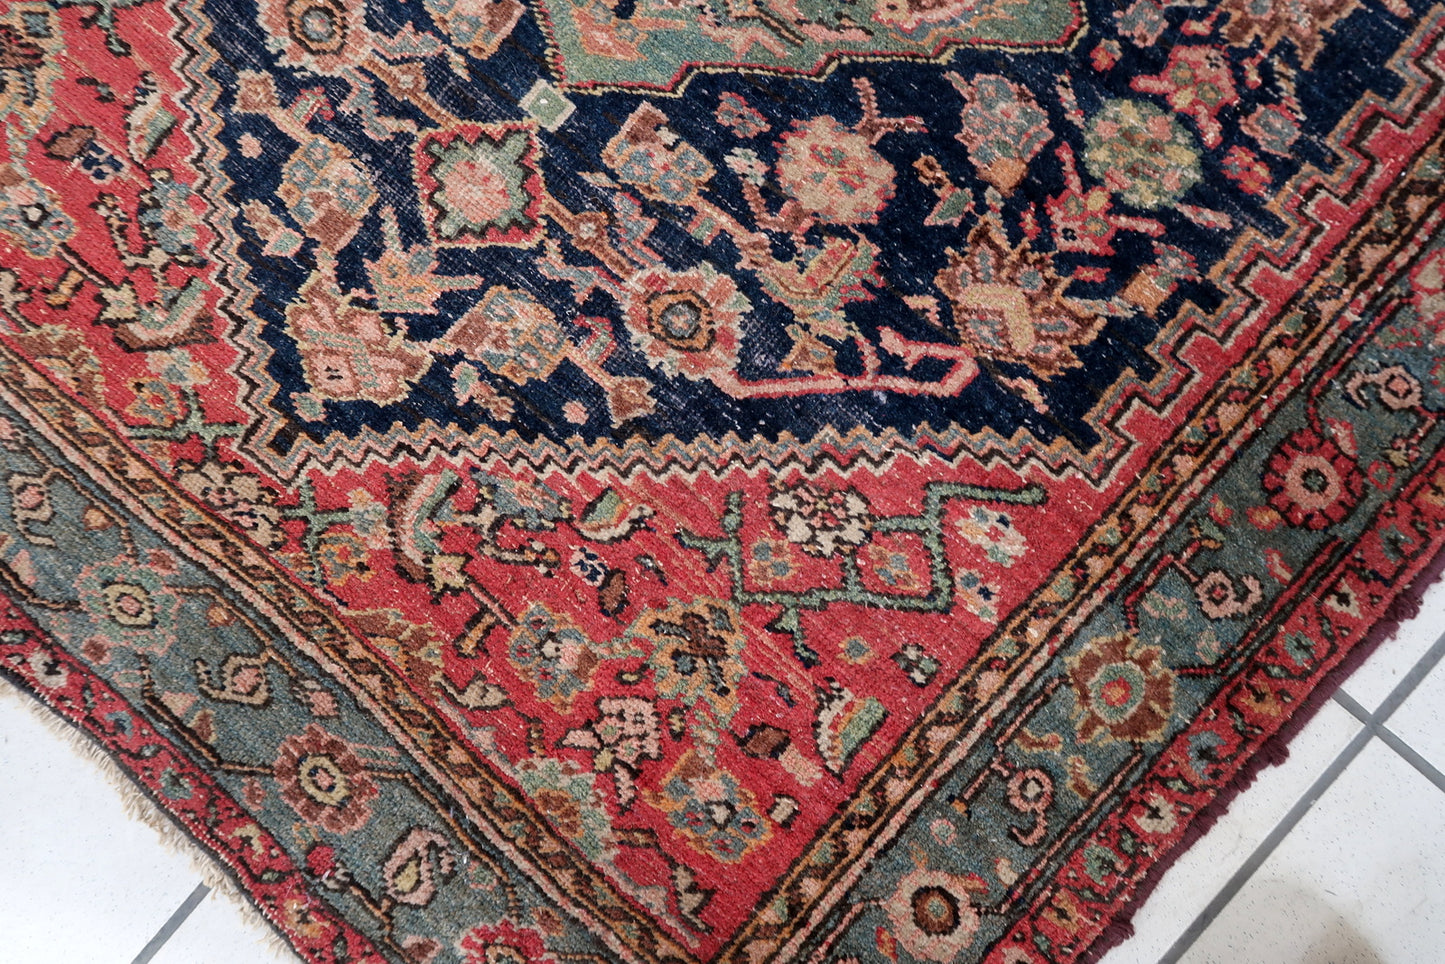 Historical Persian Rug Texture